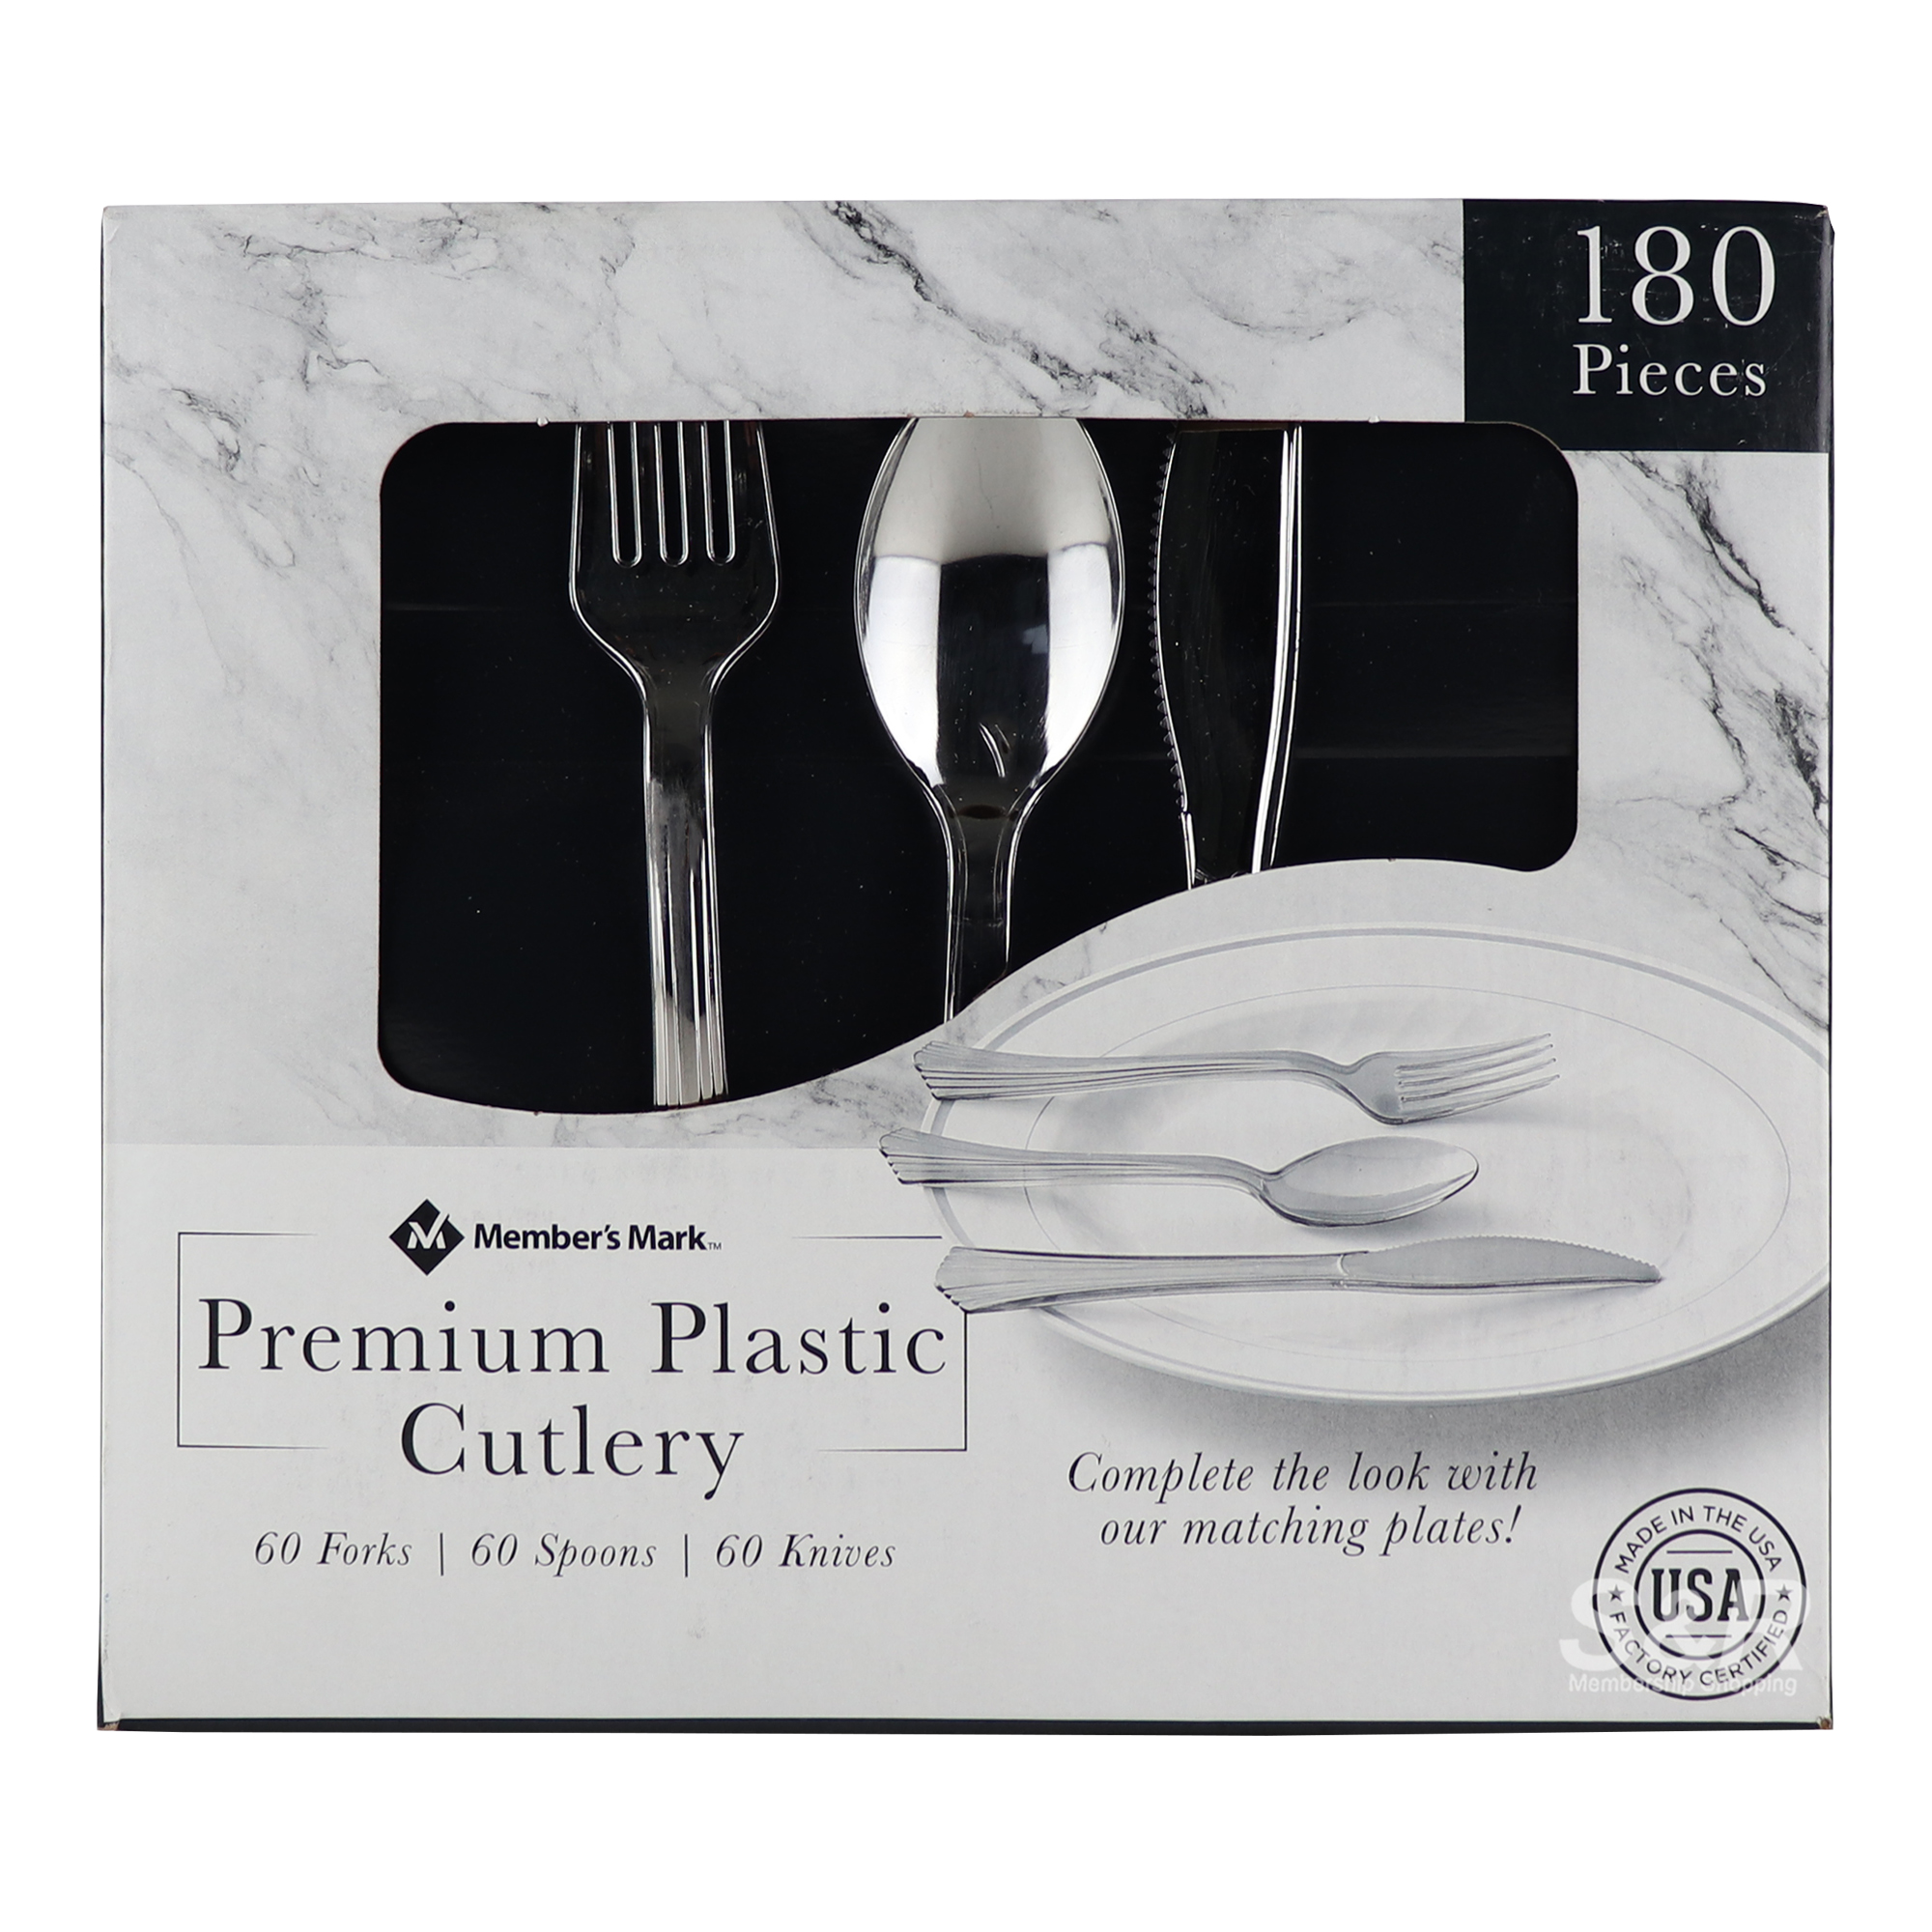 Member's Mark Premium Plastic Cutlery 180pcs